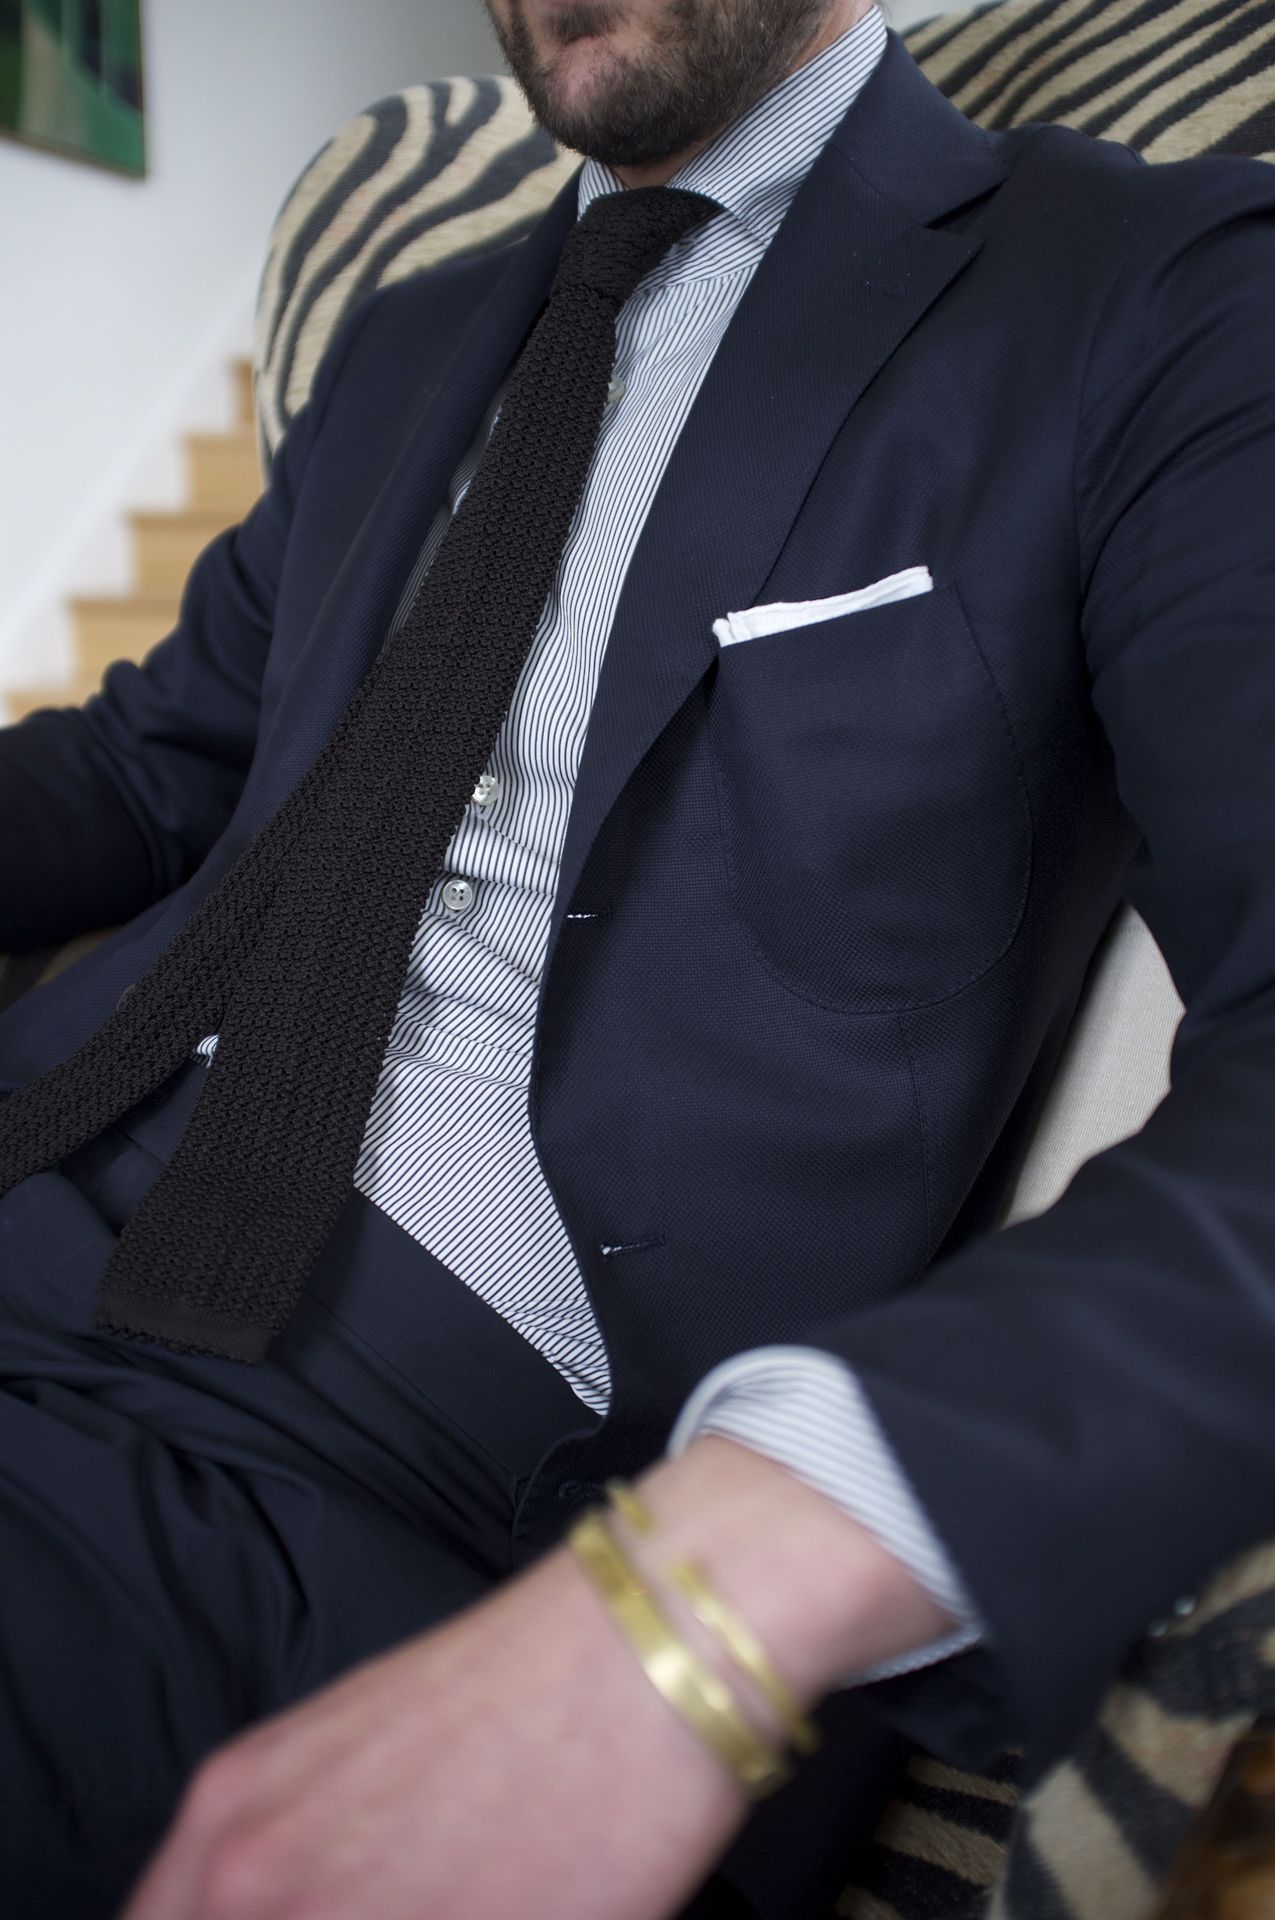 Navy suit, white shirt, black tie? | Page 2 | Styleforum